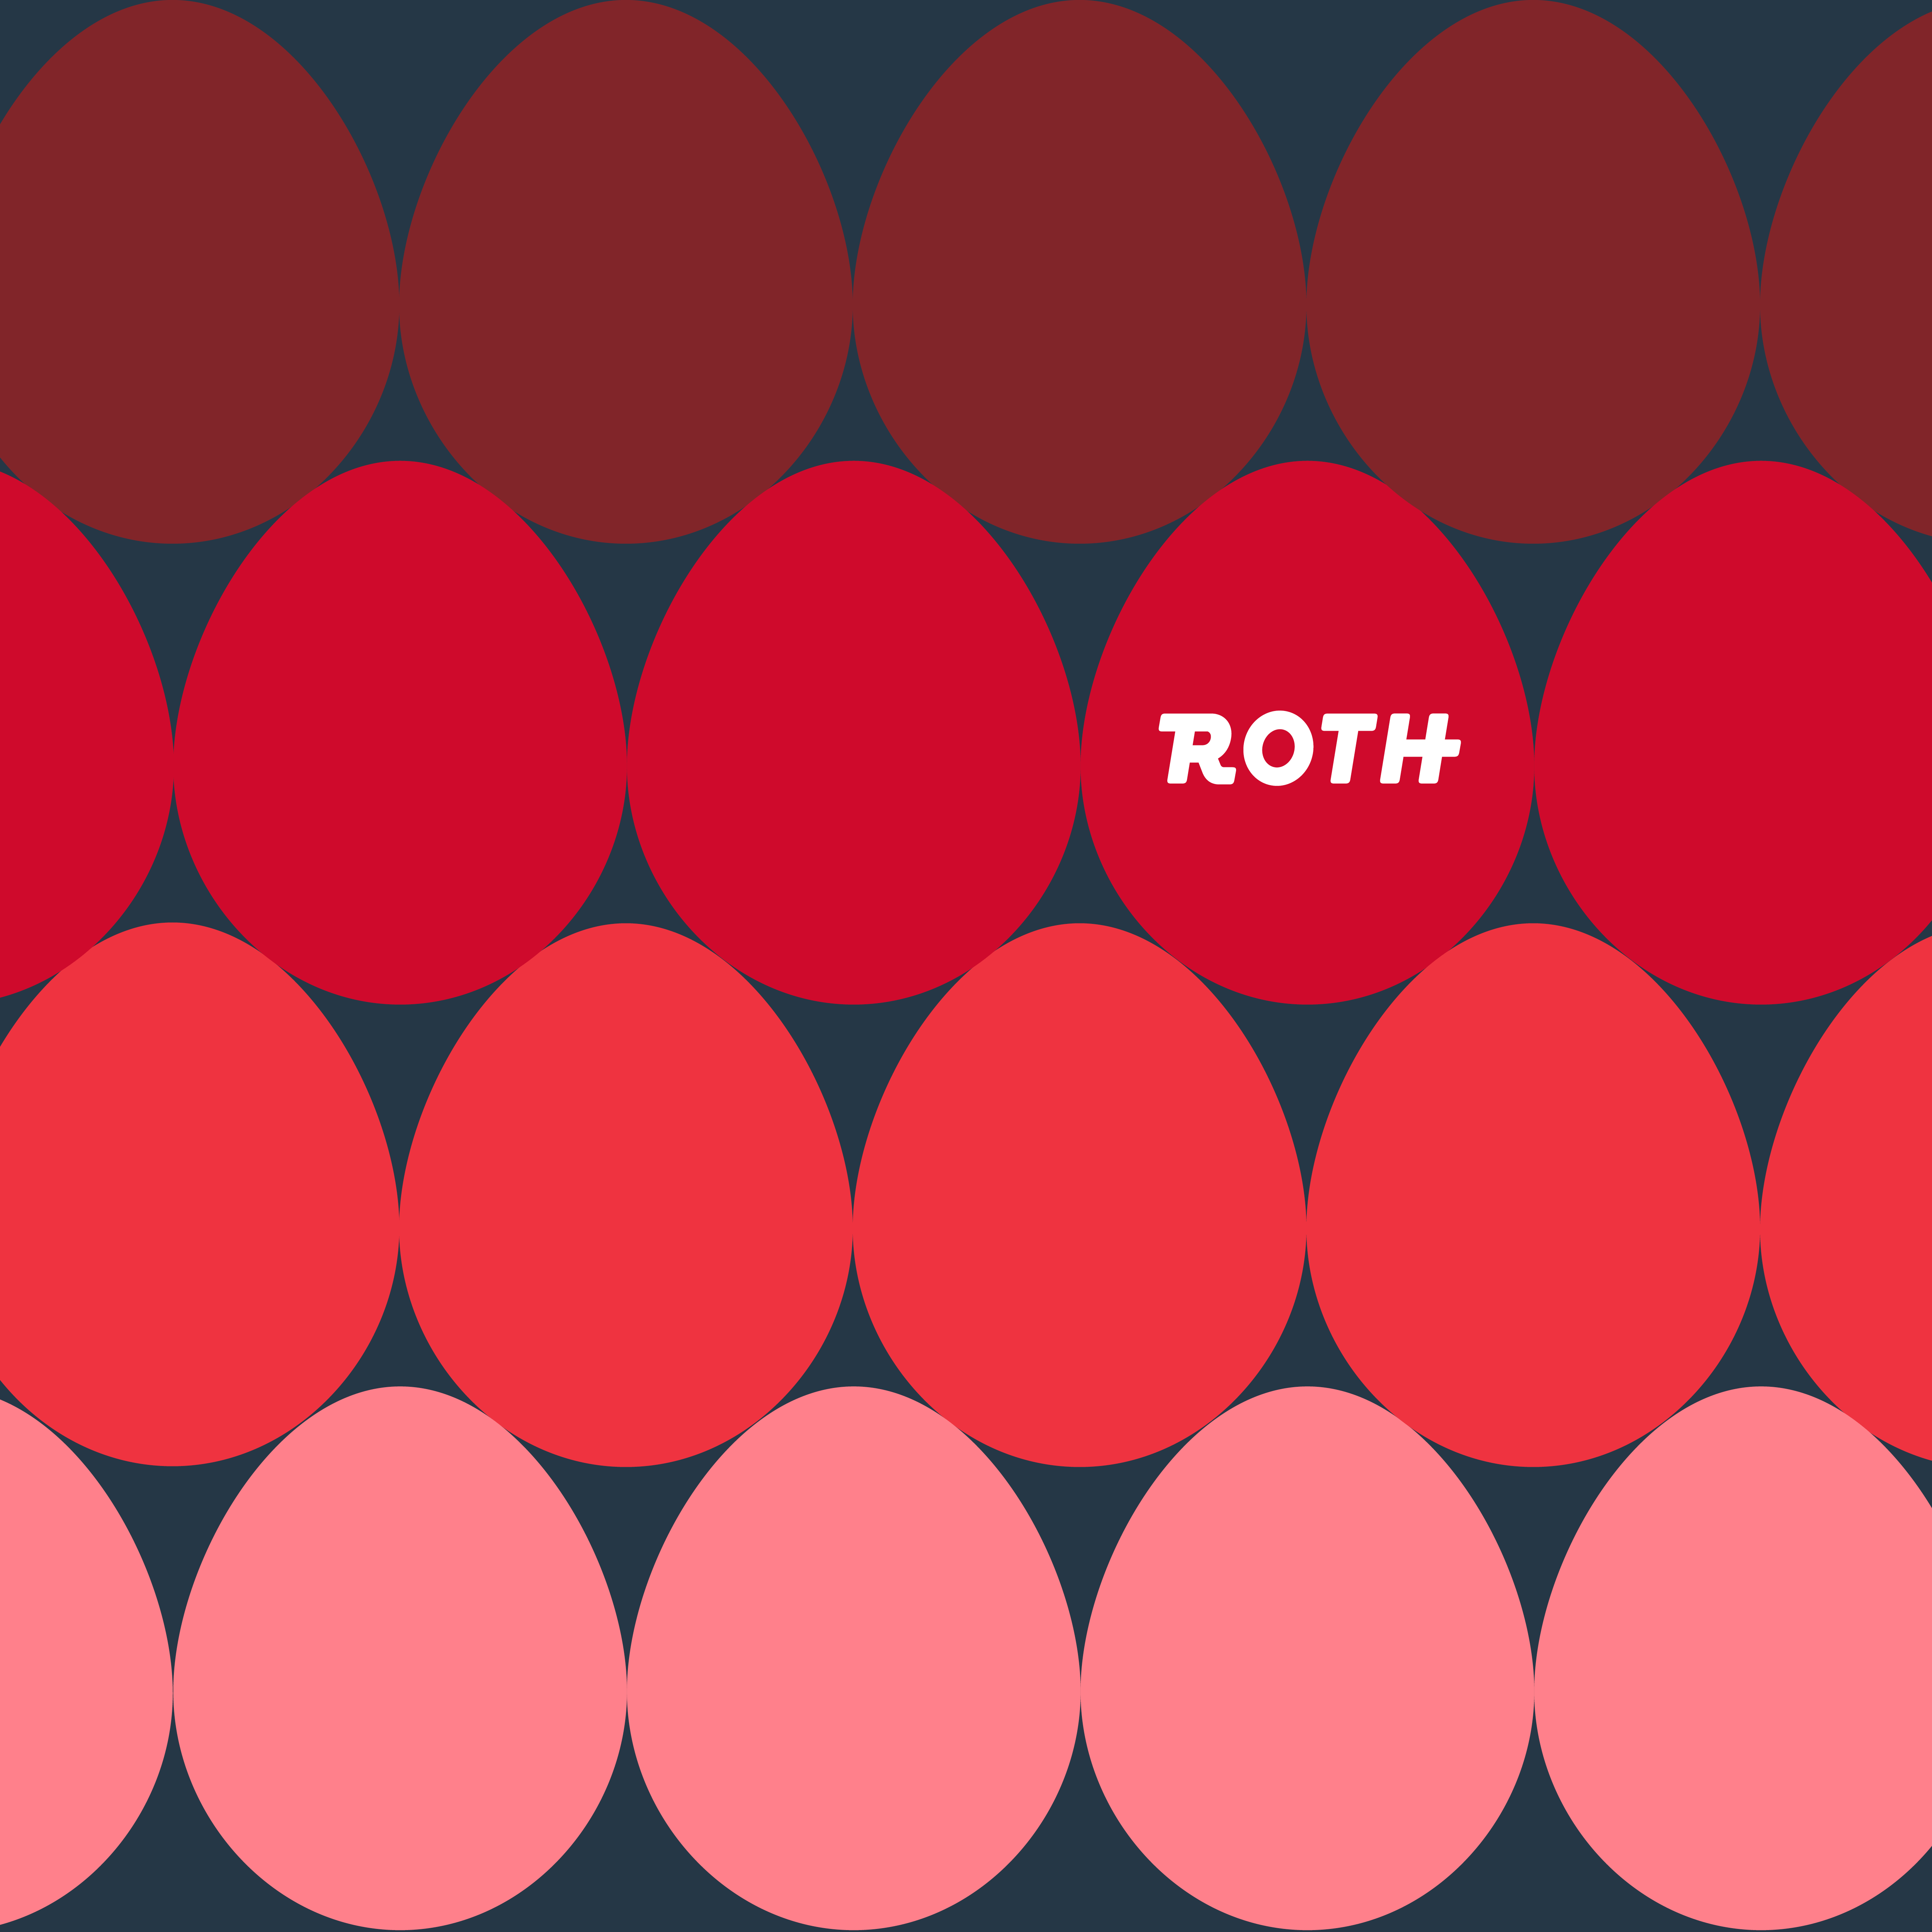 Frohe Ostern wünscht die ROTH Gruppe